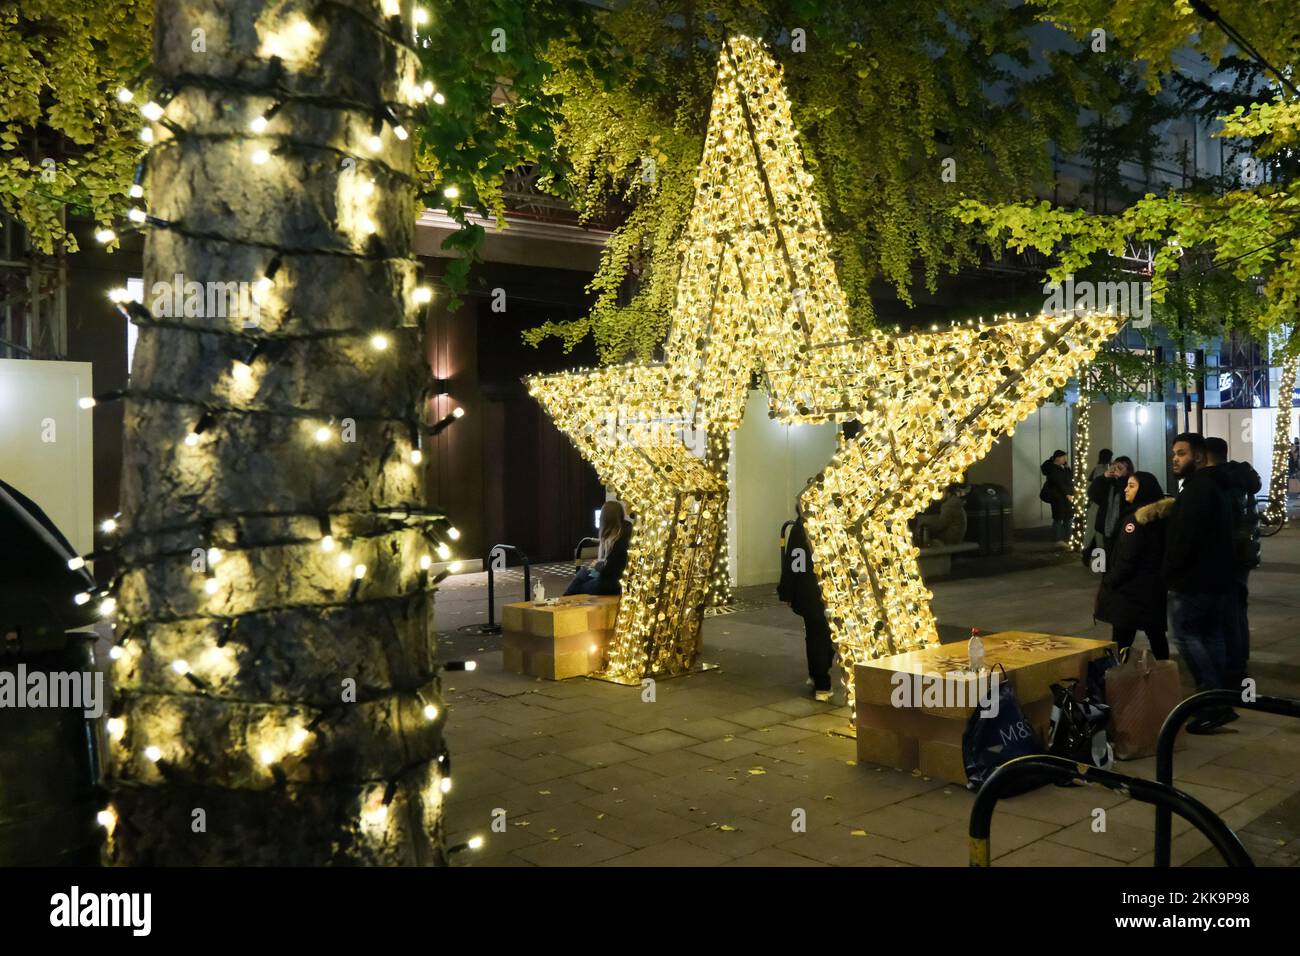 Oxford Market, Oxford Circus, Londres, Royaume-Uni. 25th novembre 2022. Illuminations de Noël sur Oxford Market près d'Oxford Circus, Londres. Crédit : Matthew Chattle/Alay Live News Banque D'Images